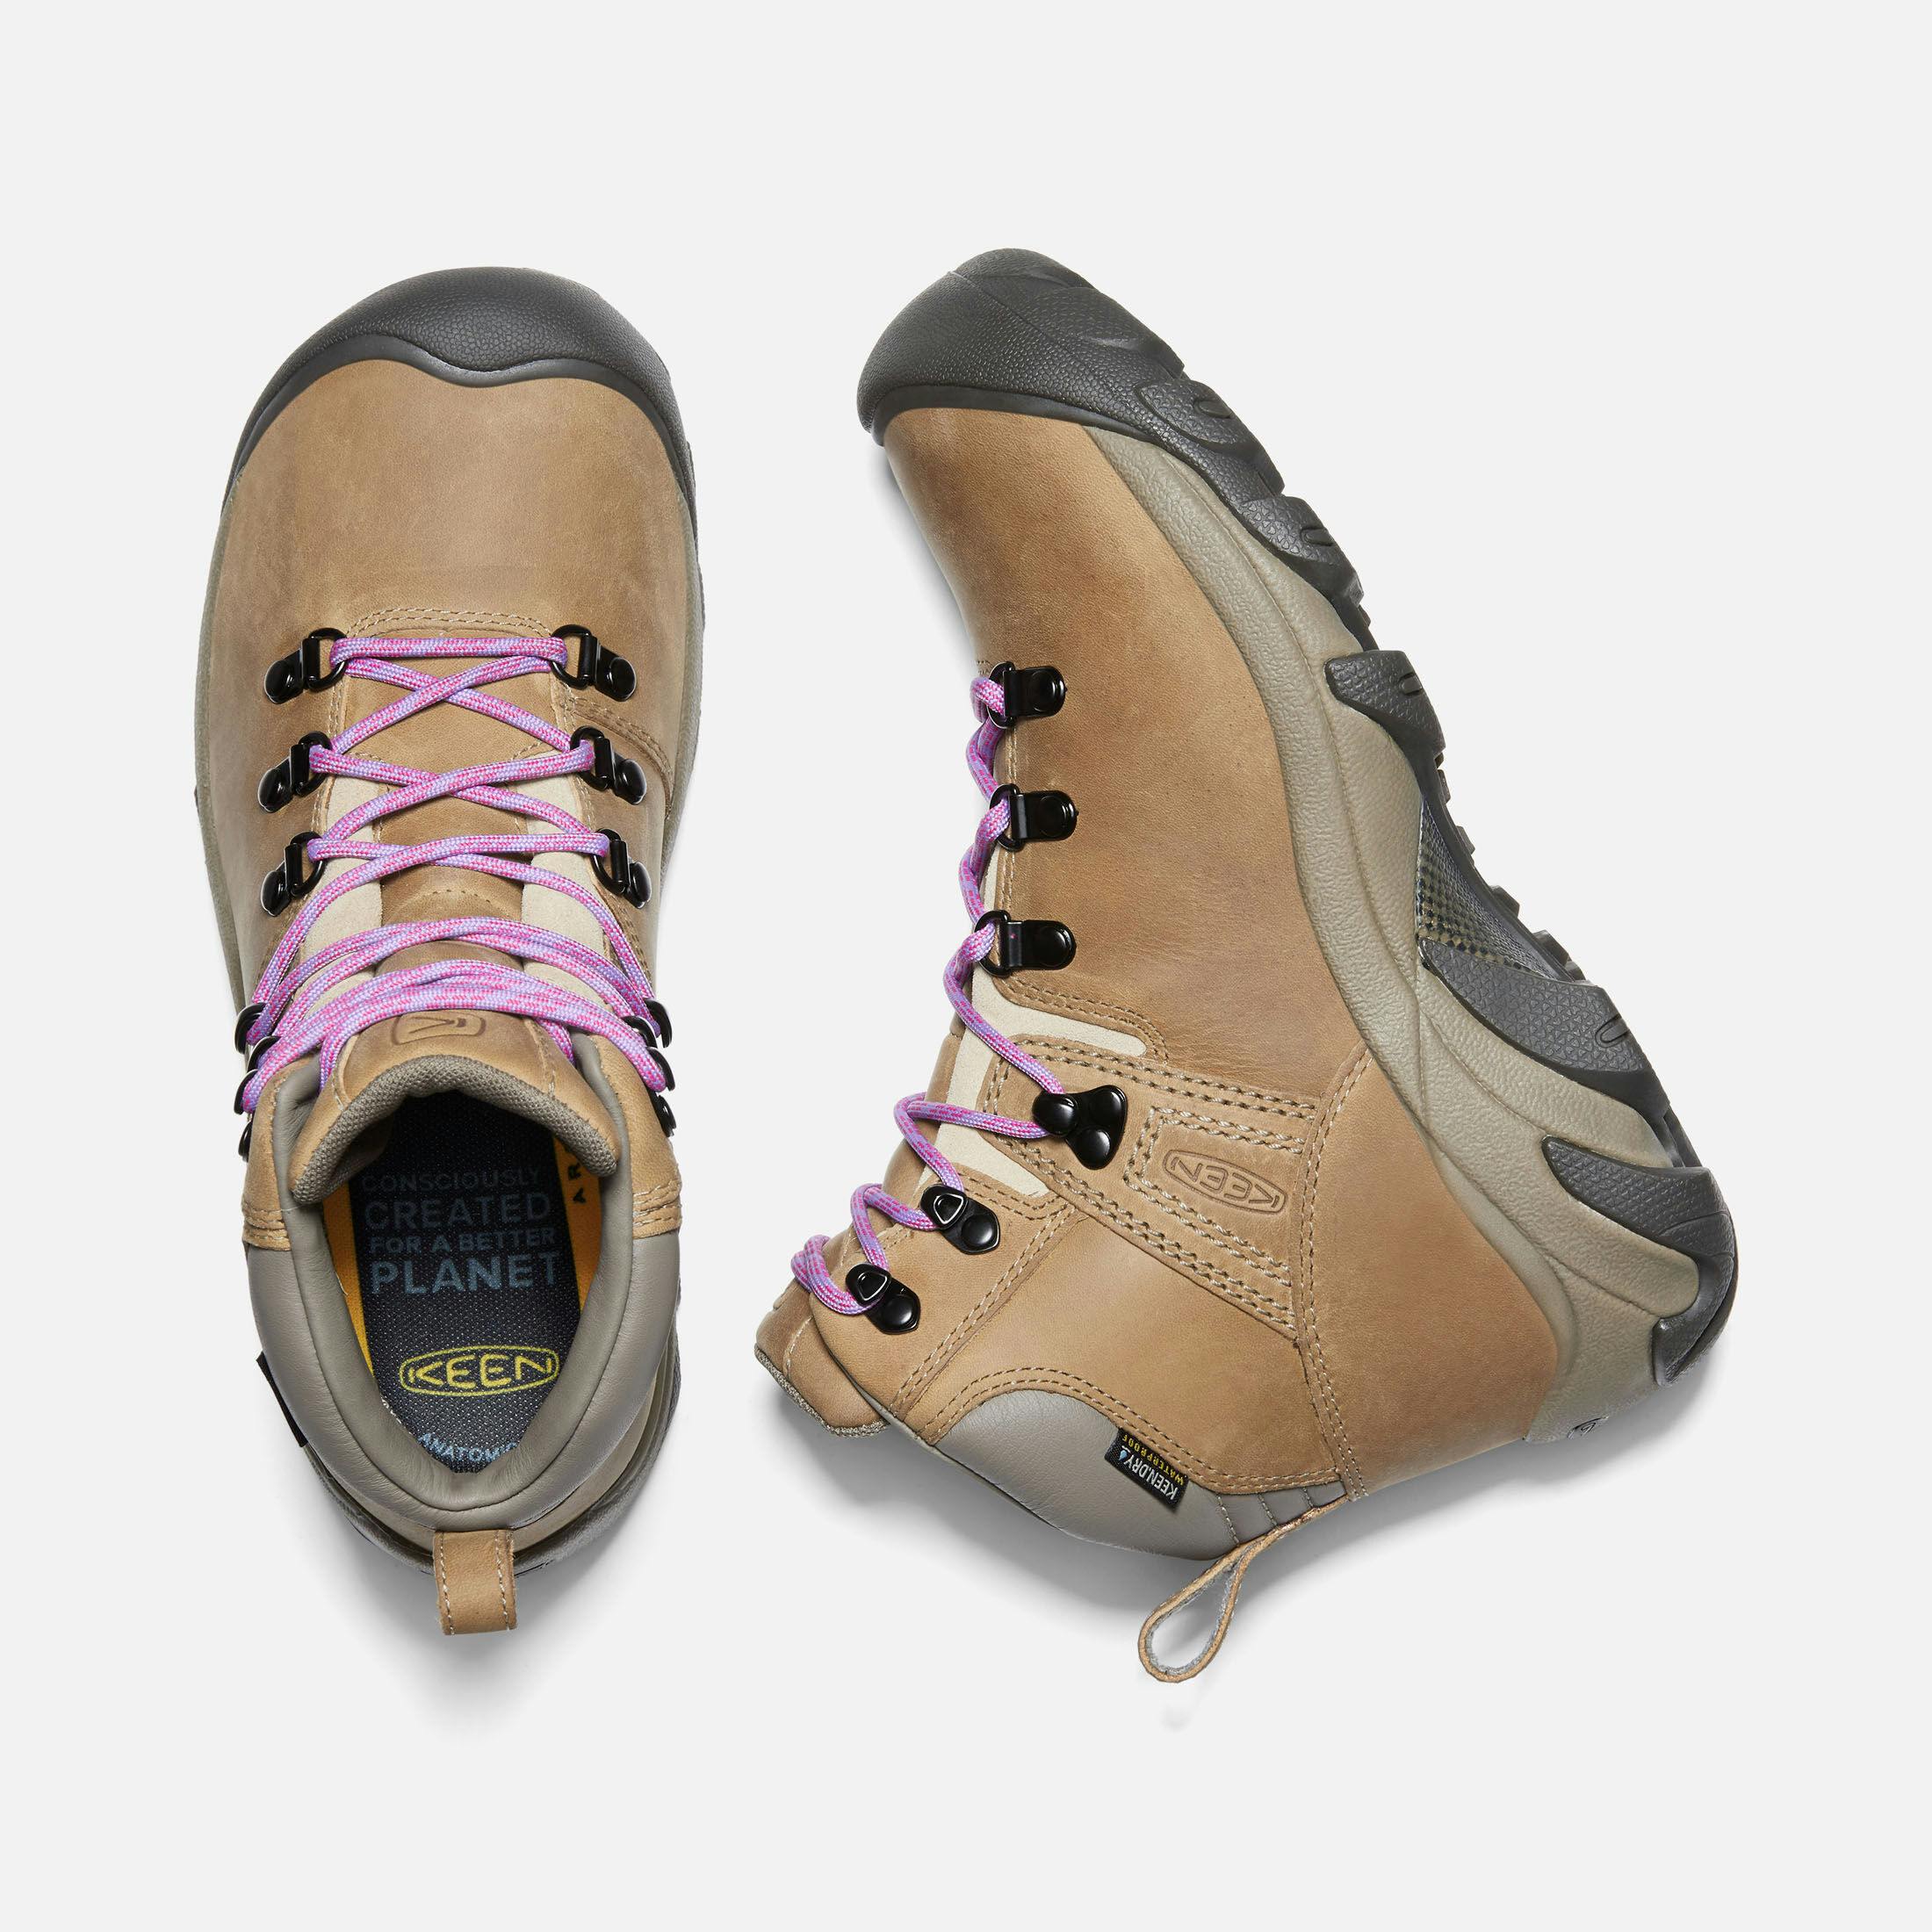 KEEN Women's Pyrenees Waterproof Hiking Boots